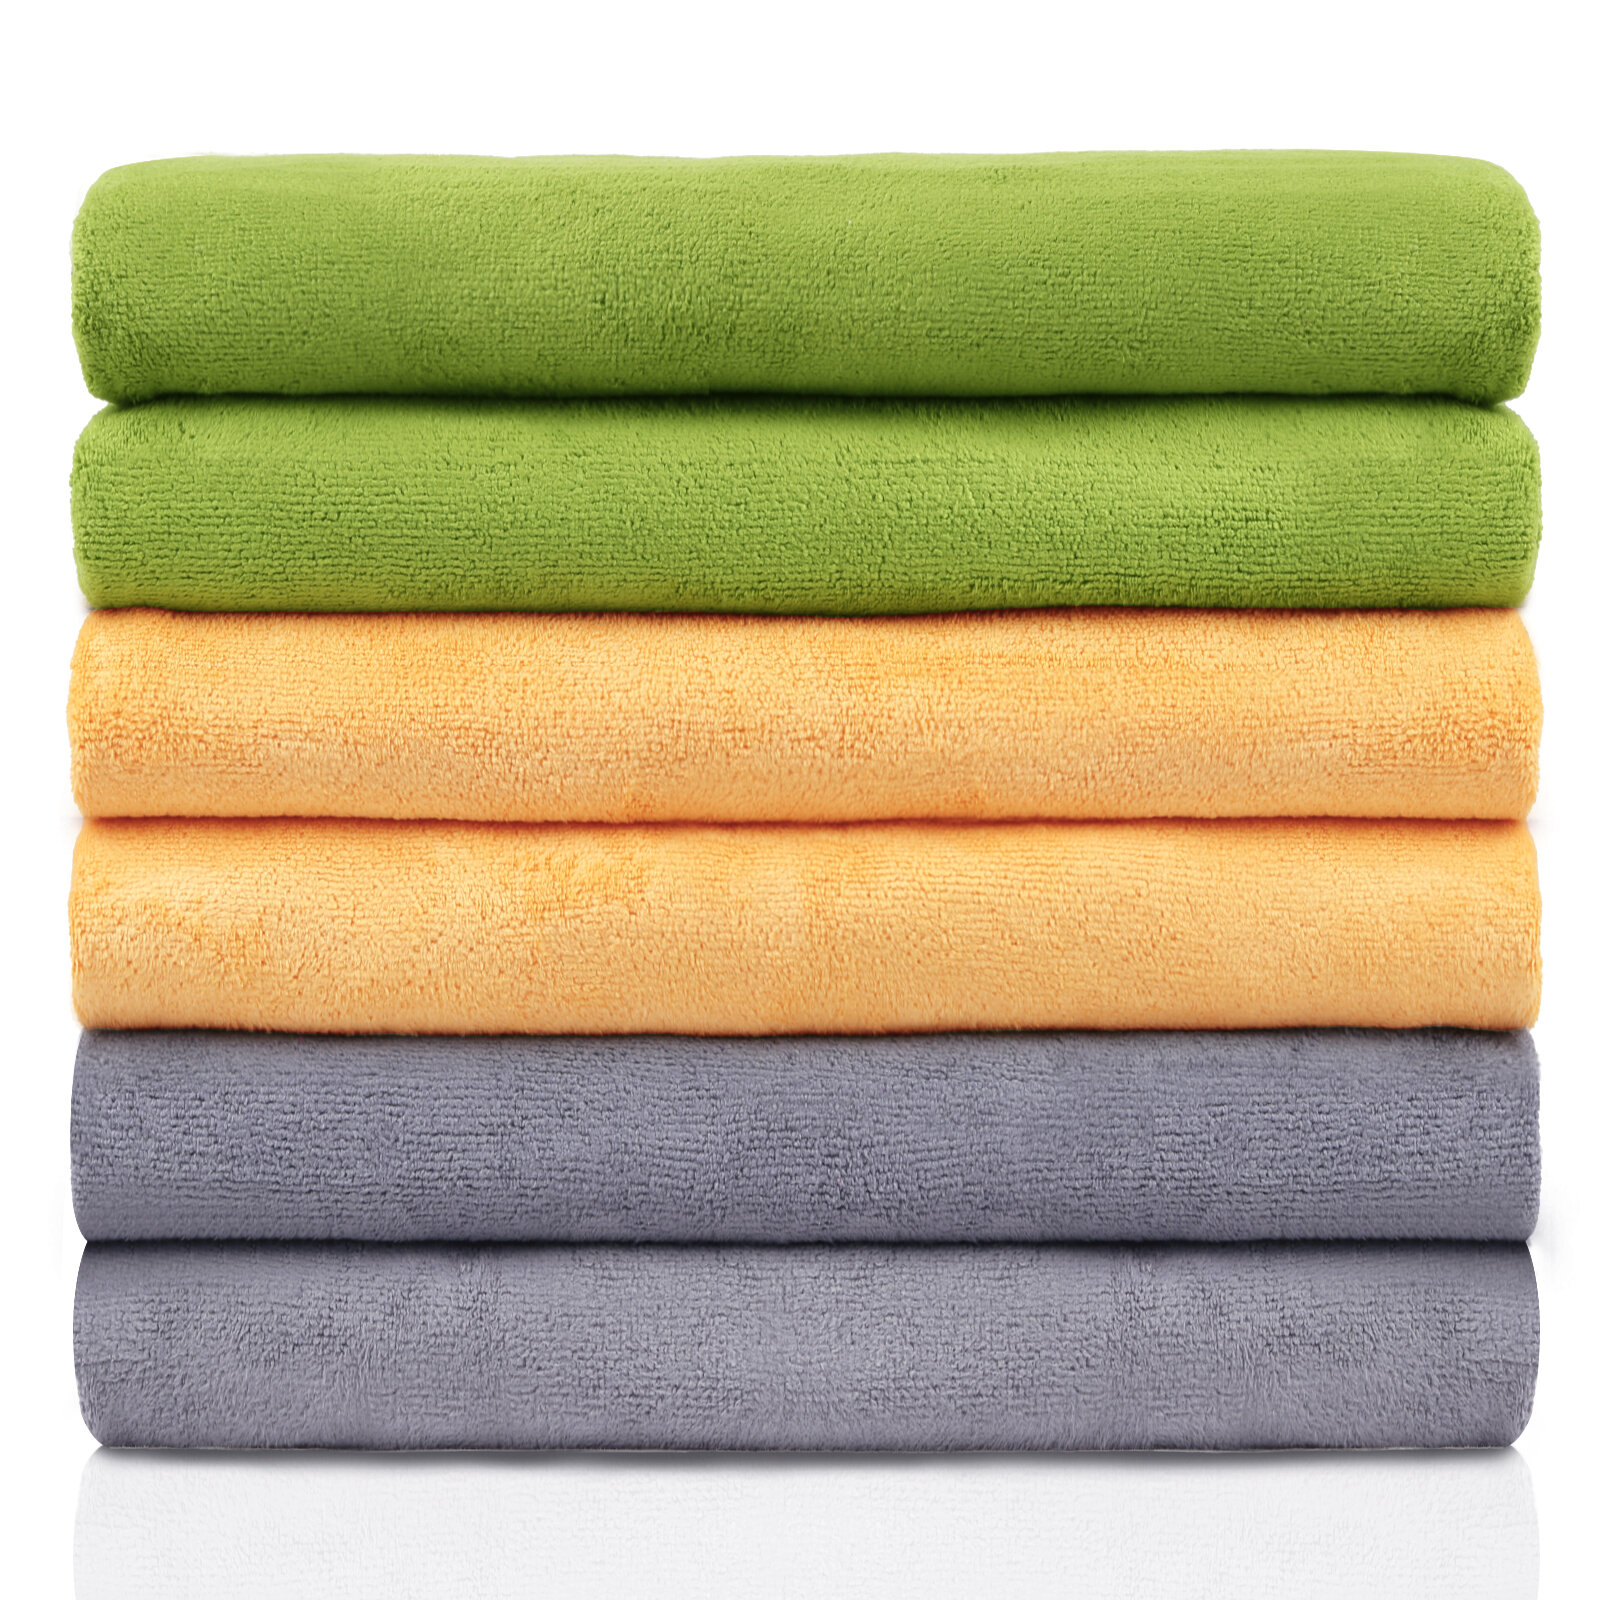 6 Pack Large Microfiber Bath Towel Pet Towel Car Wash Towels Multy-Colors Towel 